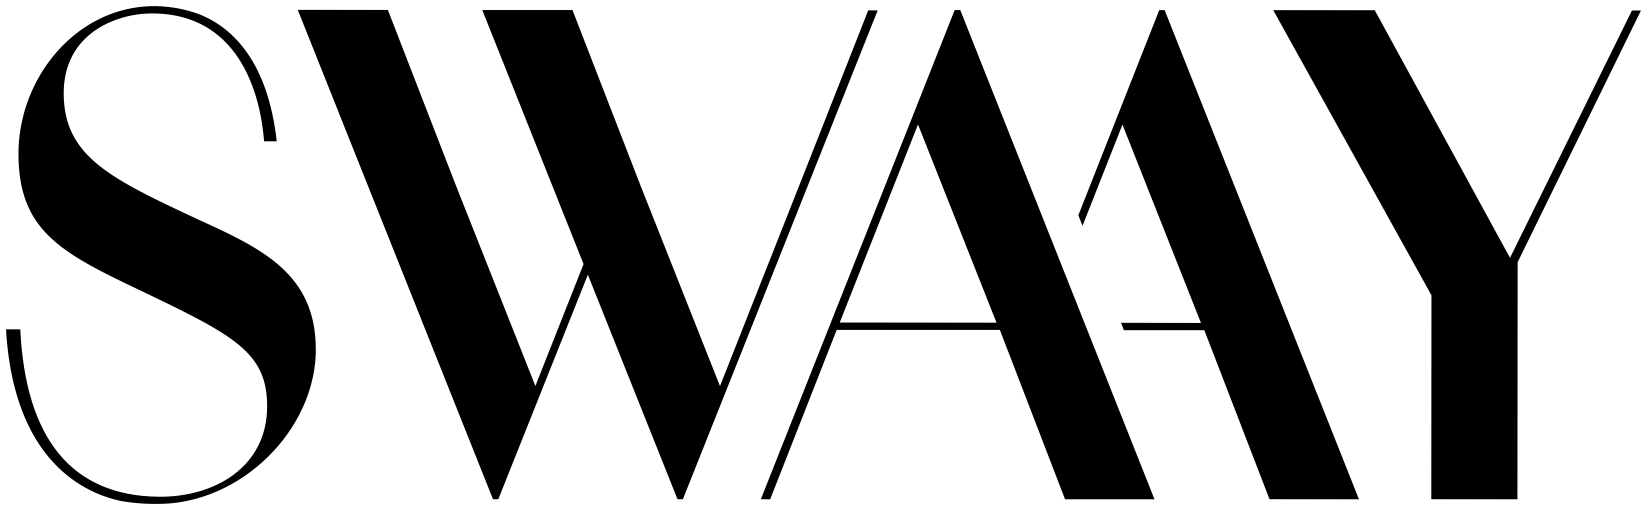 SWAAY Logo Women Who Dare